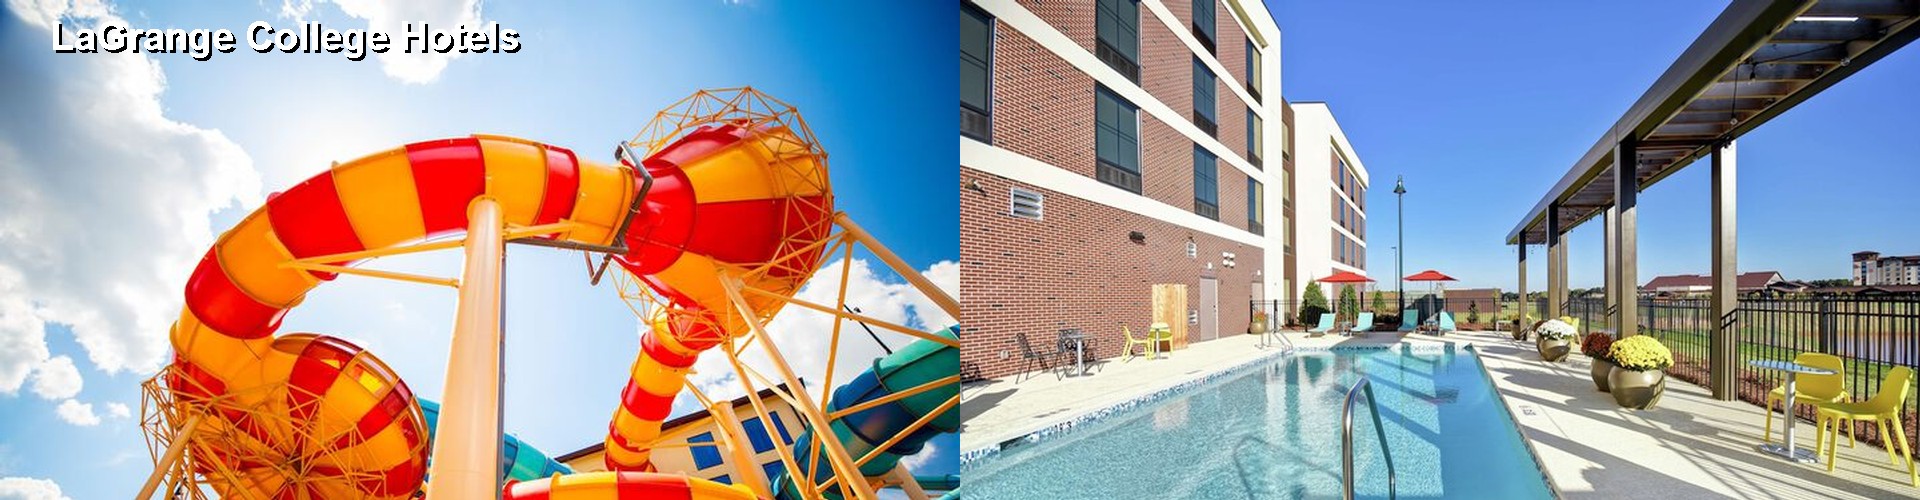 5 Best Hotels near LaGrange College